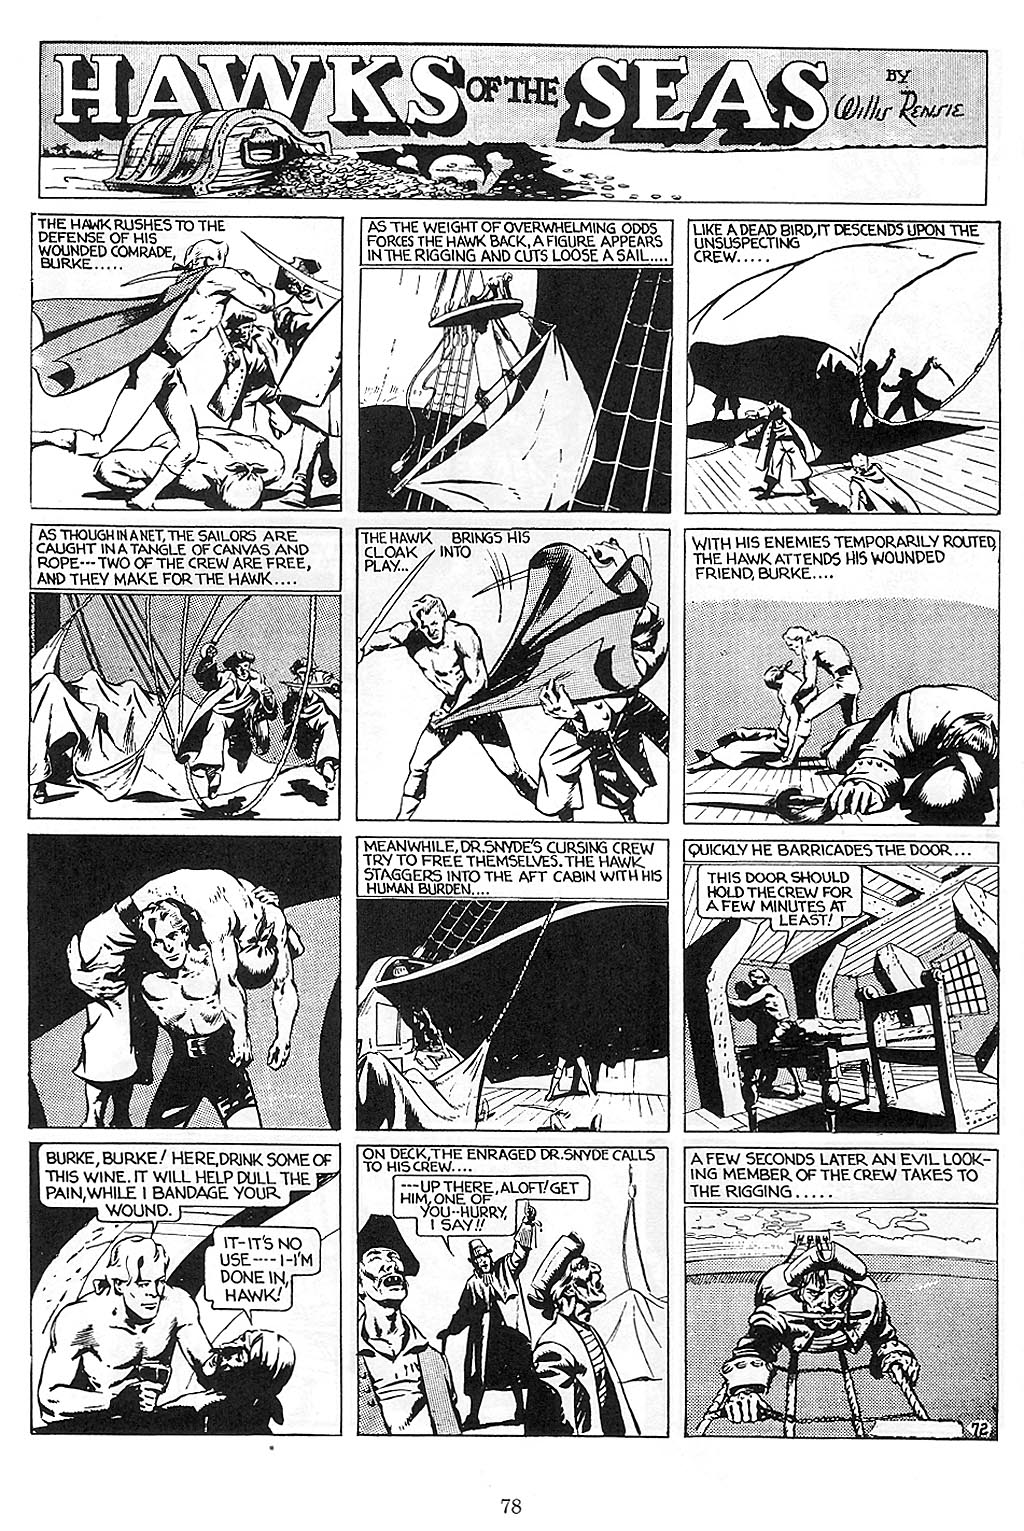 Read online Will Eisner's Hawks of the Seas comic -  Issue # TPB - 79